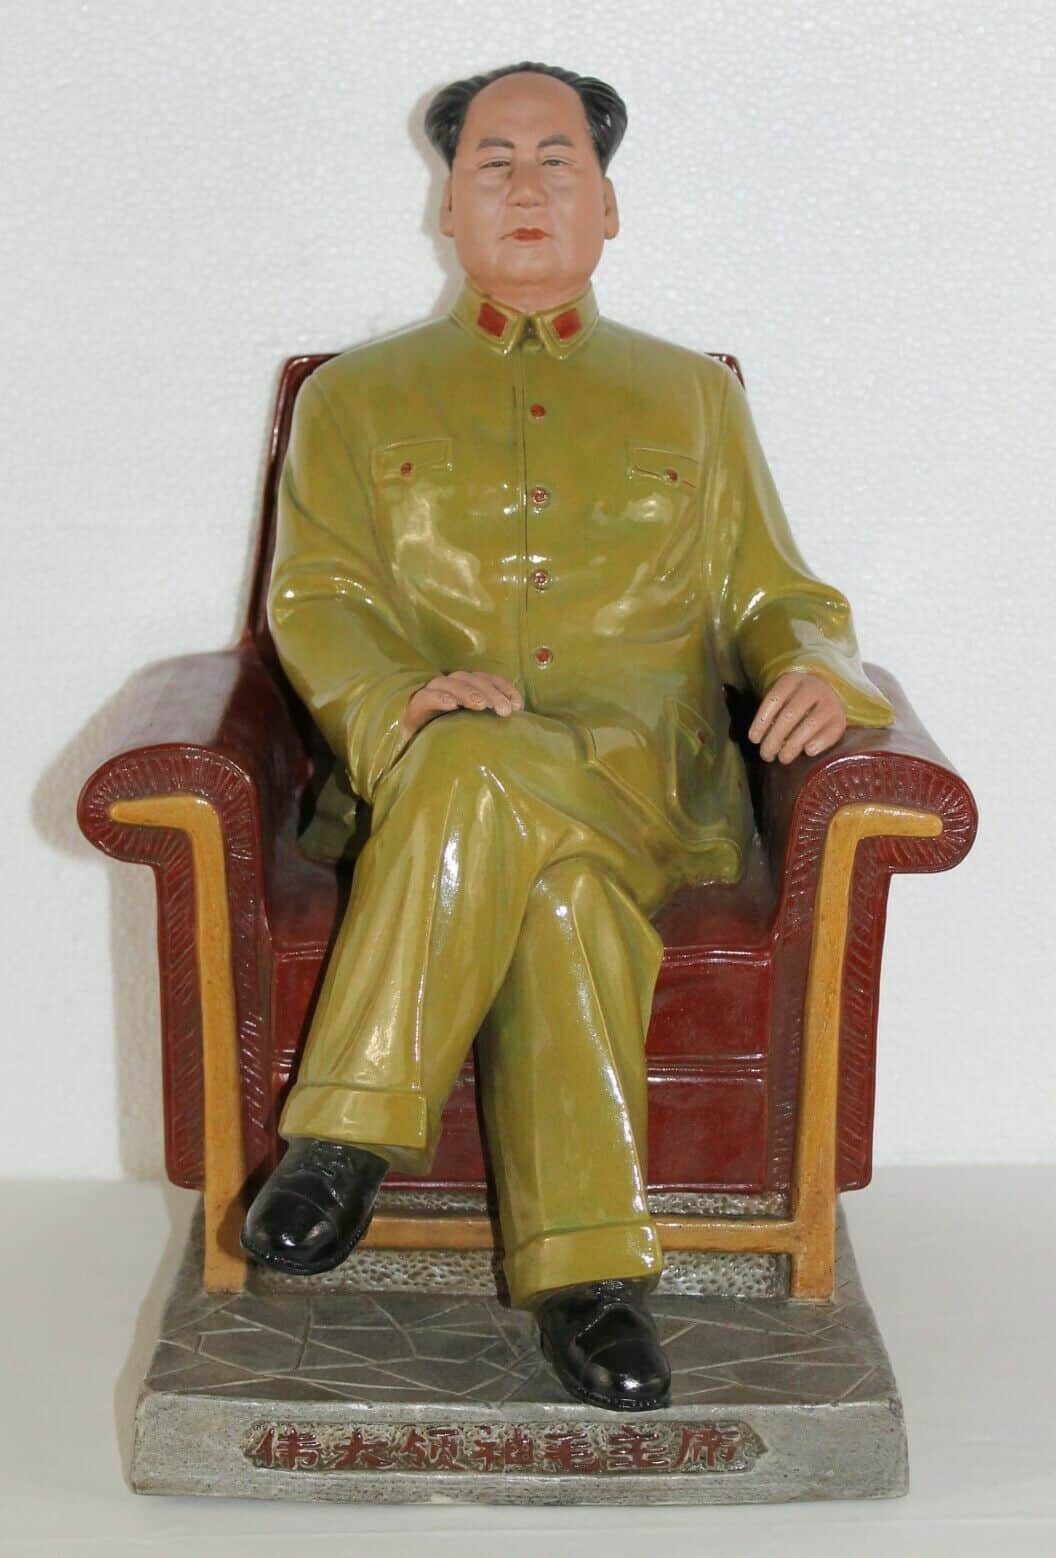 Large Sculpture Chinese Pottery Chairman Mao Zedong, Mao Tse-Tung